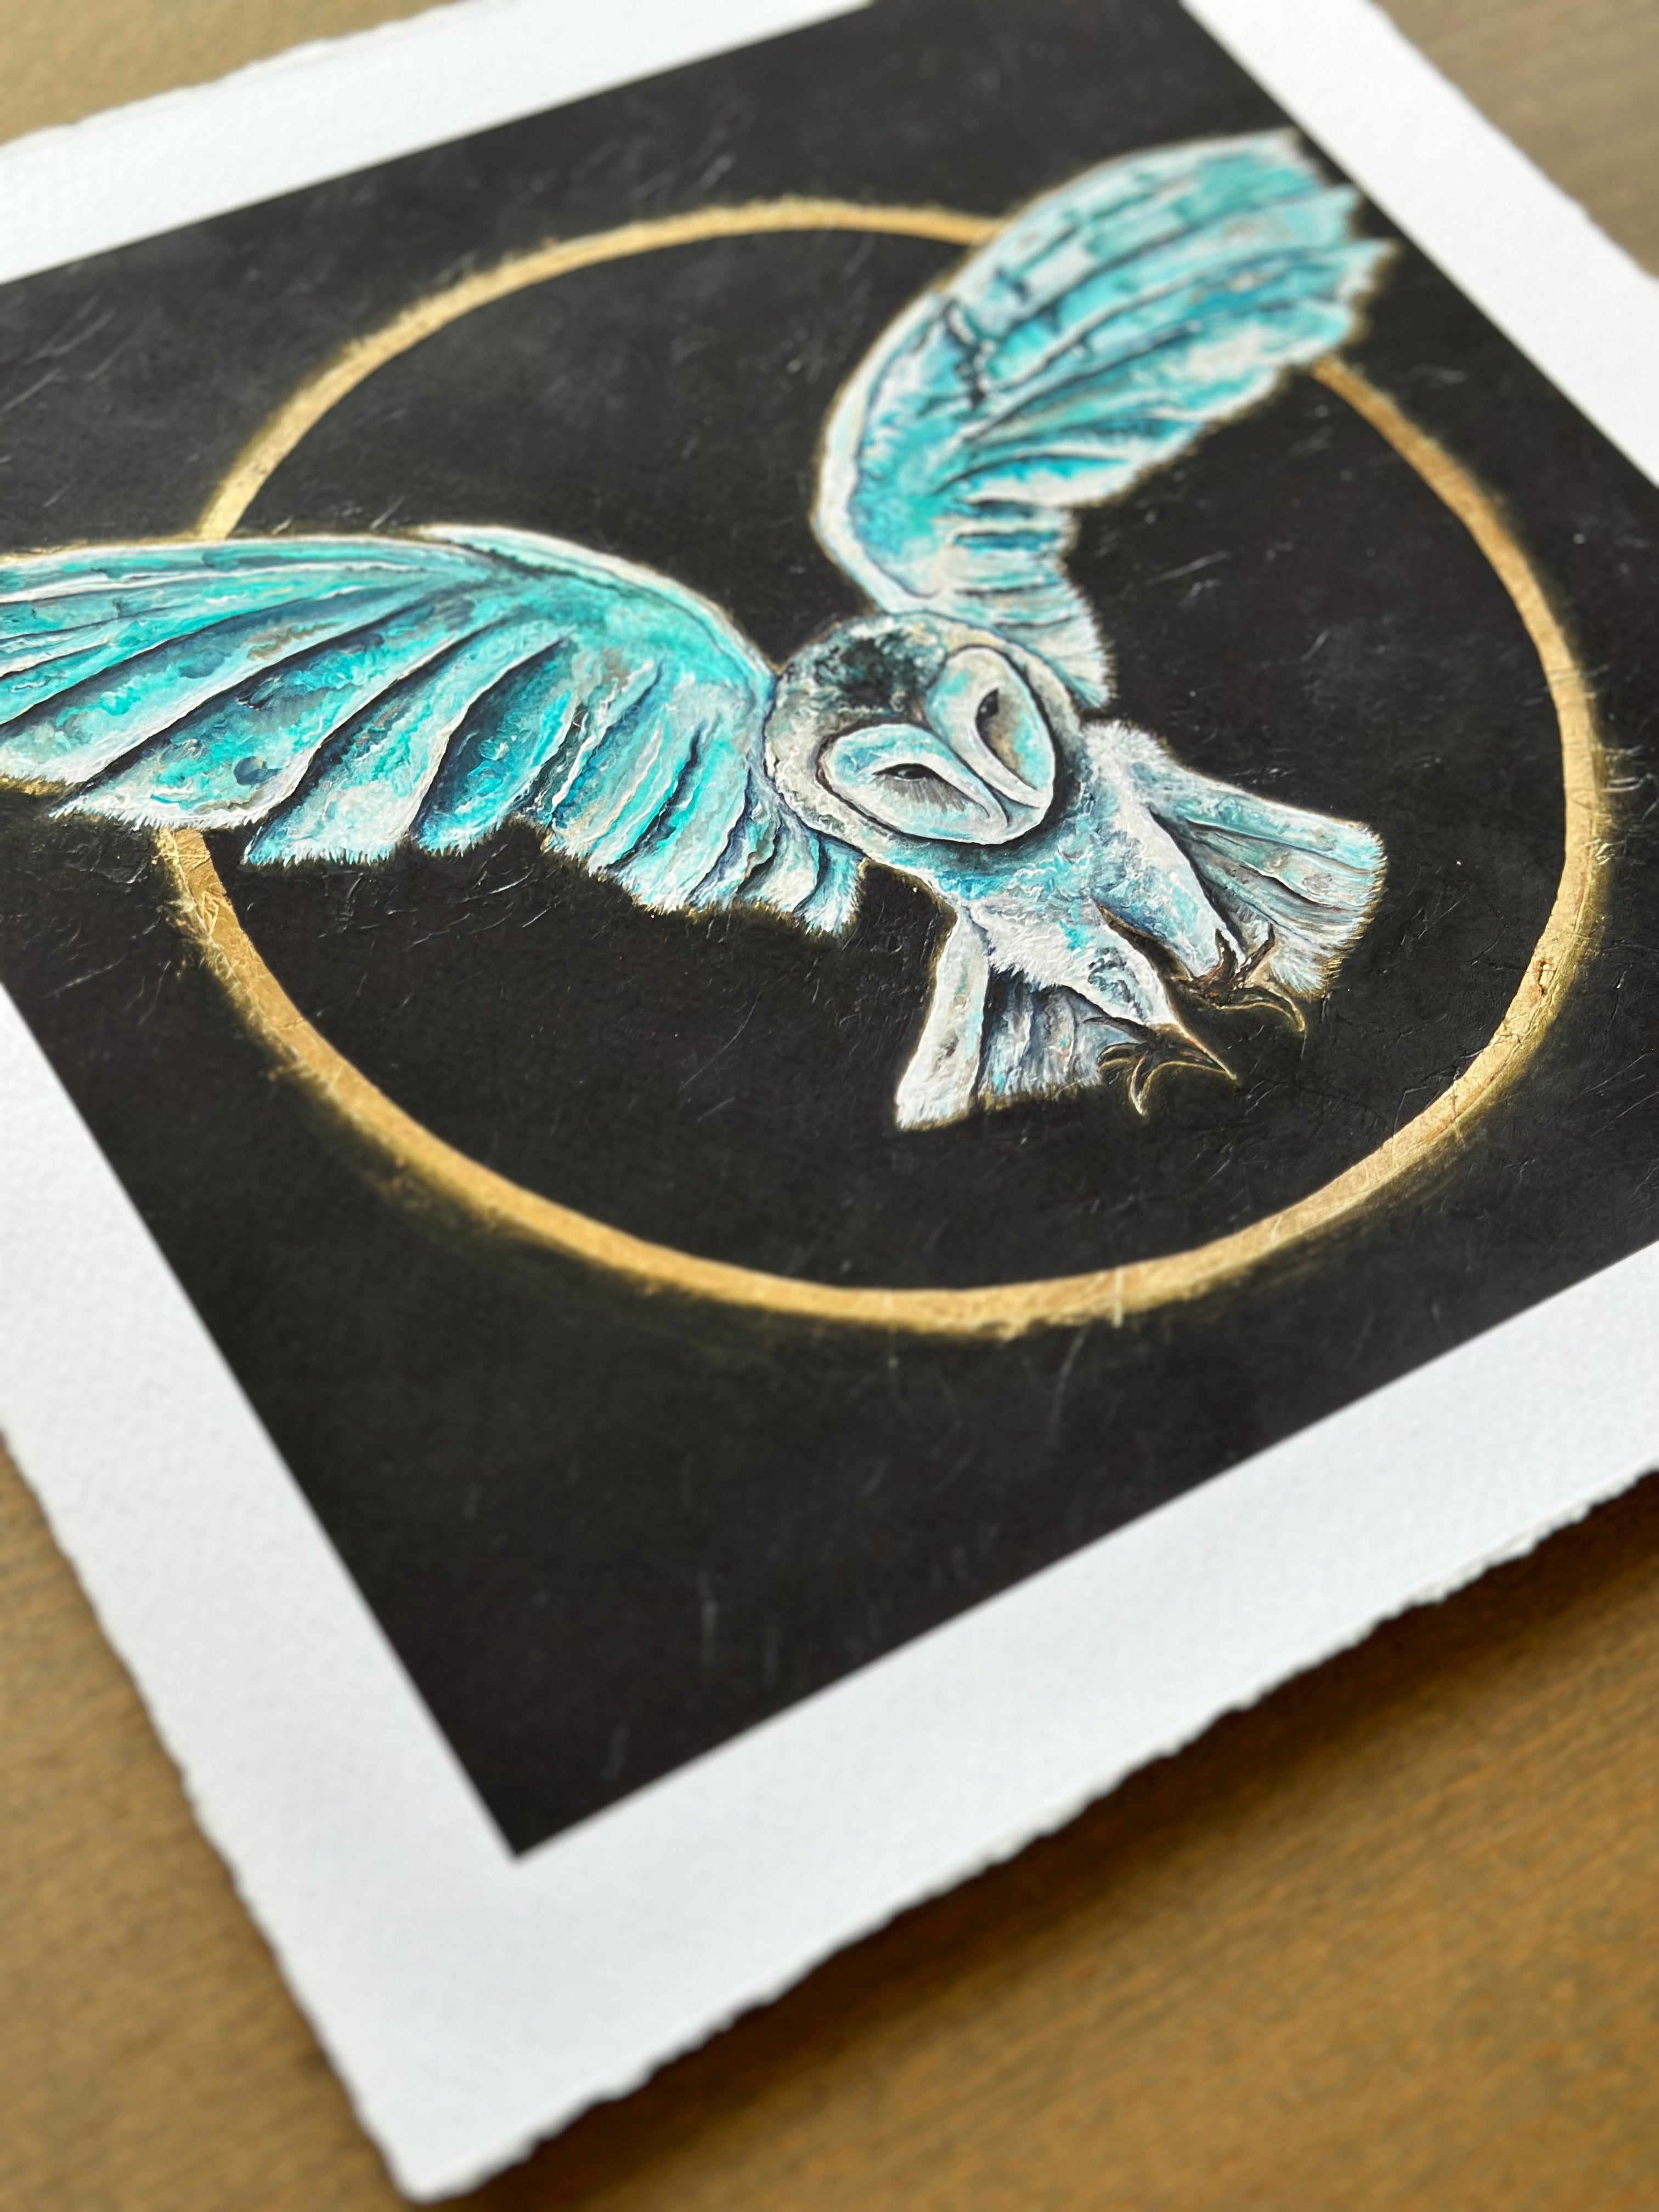 Sapience Framed Owl Print